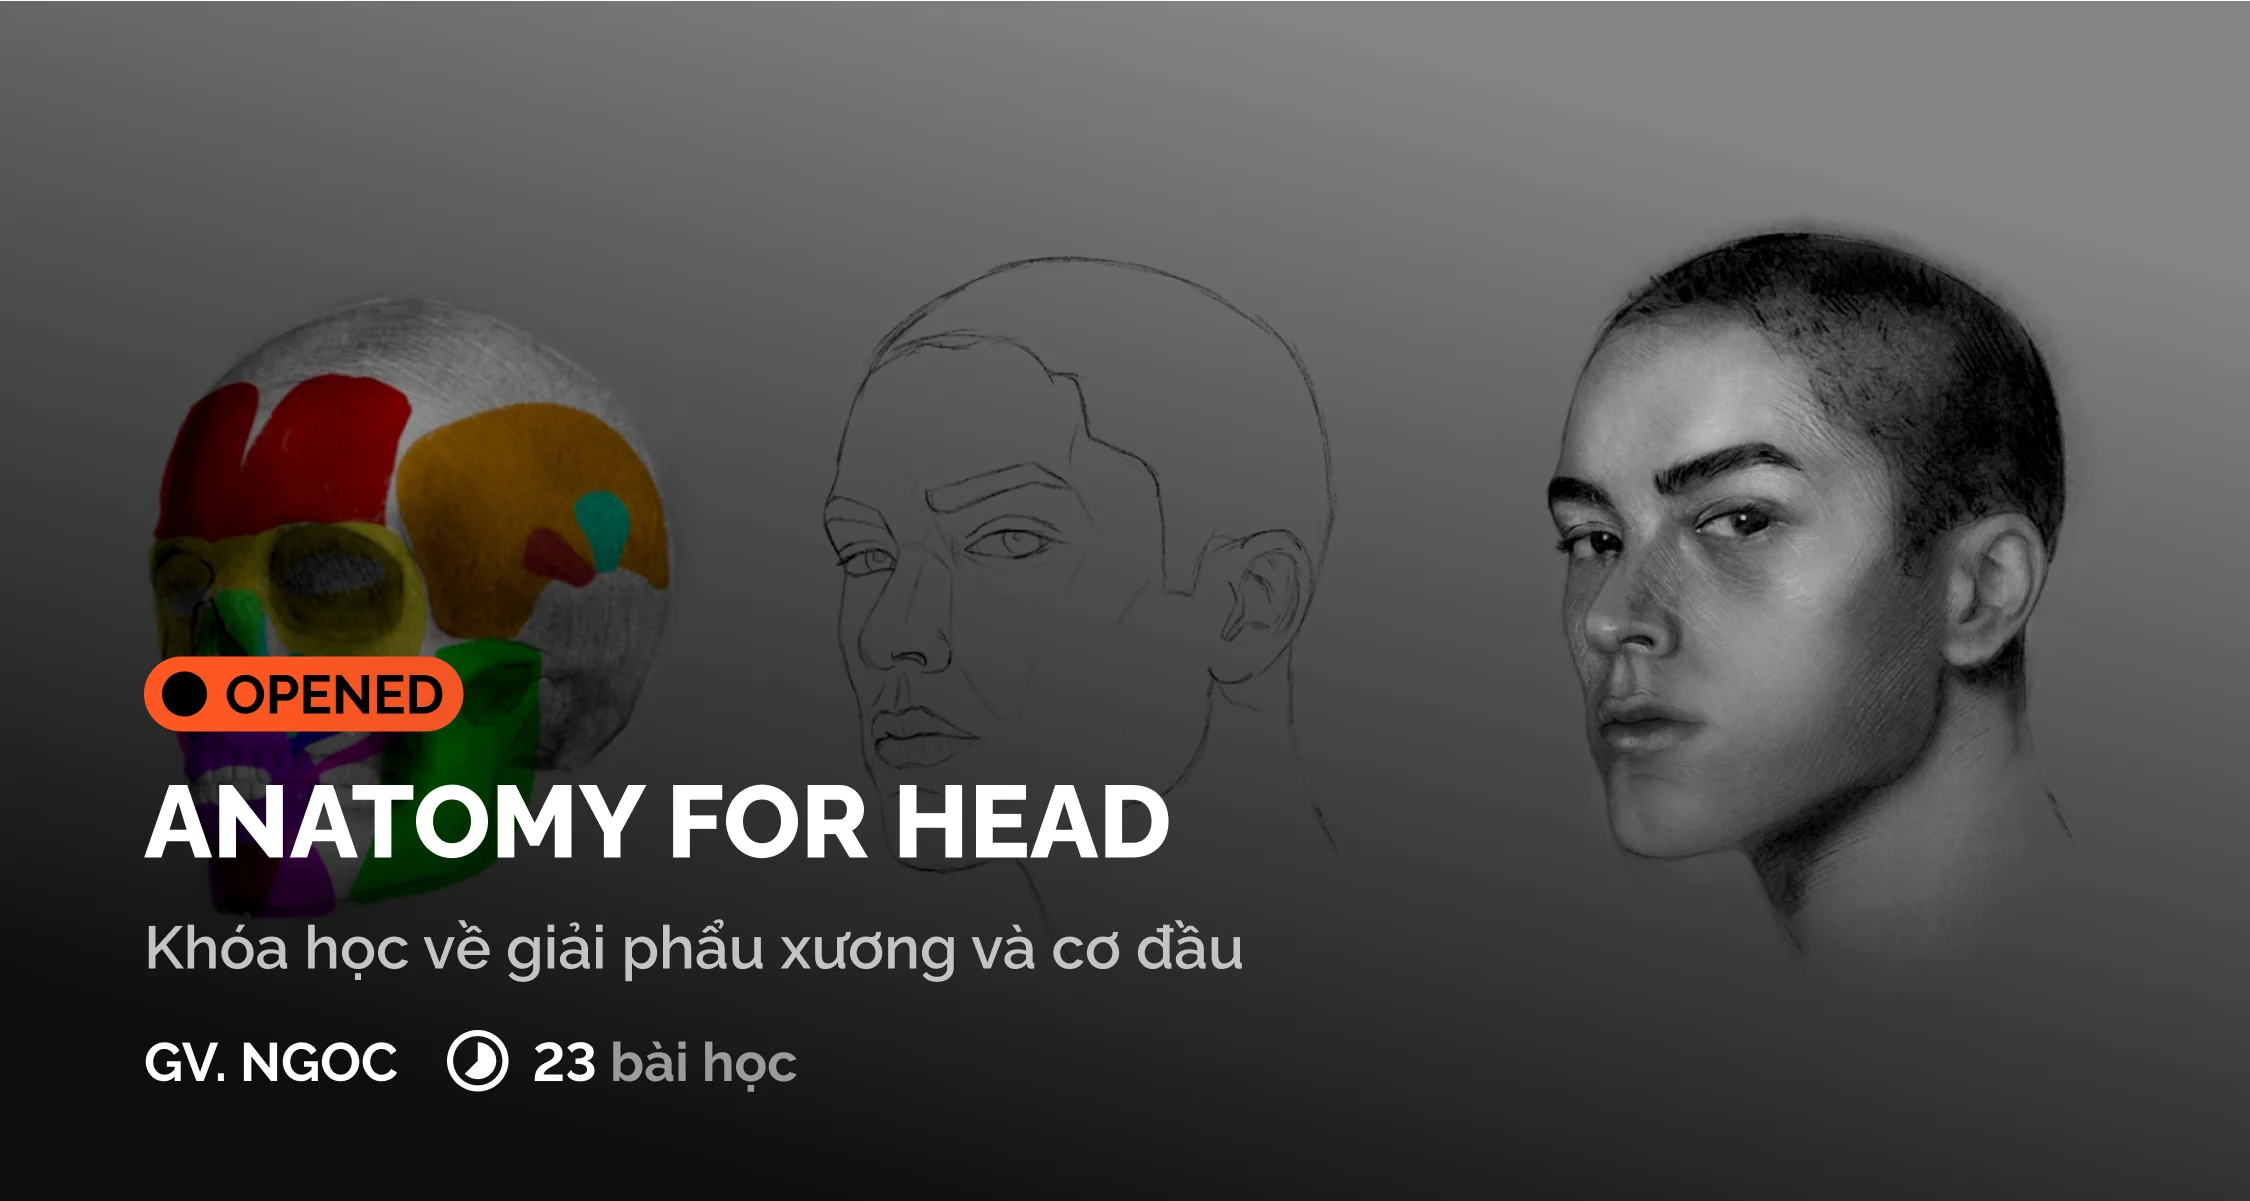 ANATOMY FOR HEAD